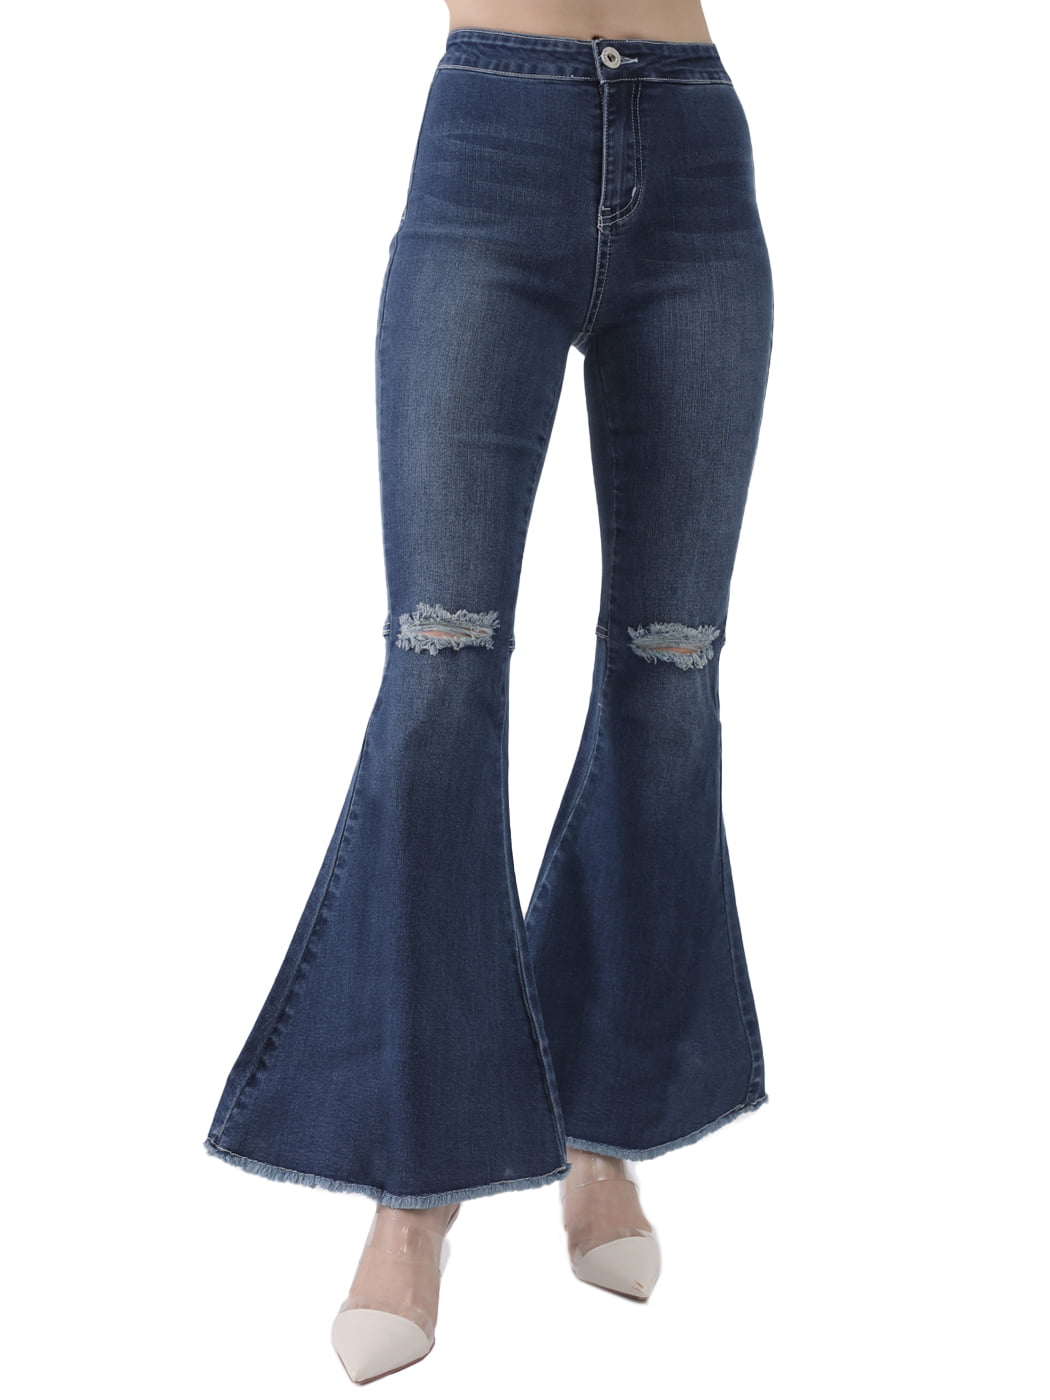 Feinuhan Womens Fashion Ripped High Waist Classic Denim Bell Bottom Jeans Dark Blue